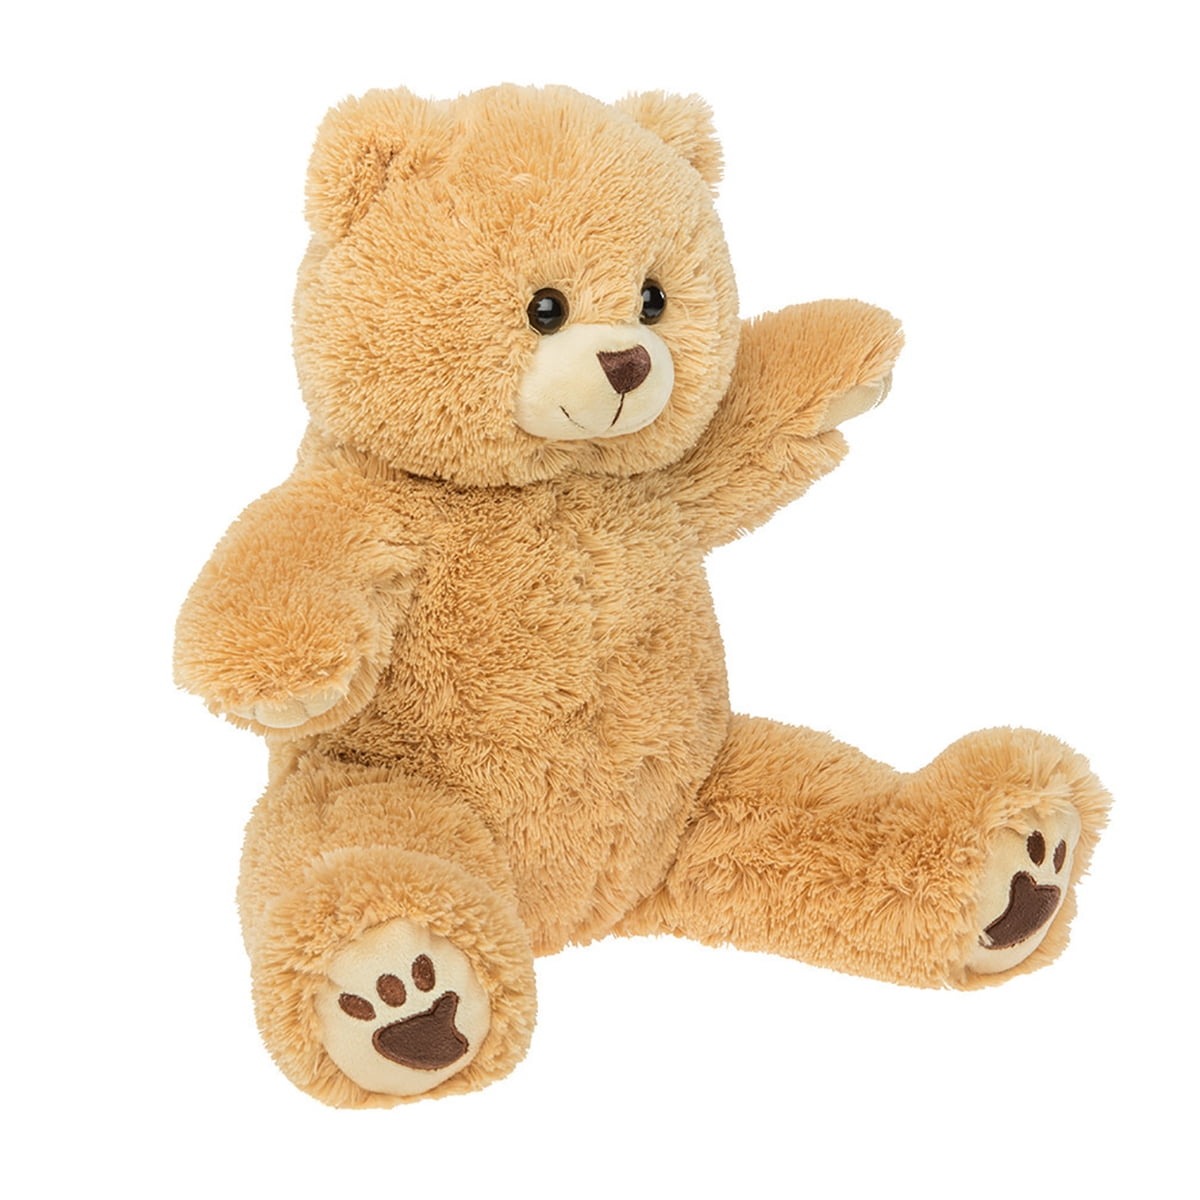 Cuddly Soft 16 inch Stuffed Brown Patches Teddy Bear...We stuff 'em...you love ' 